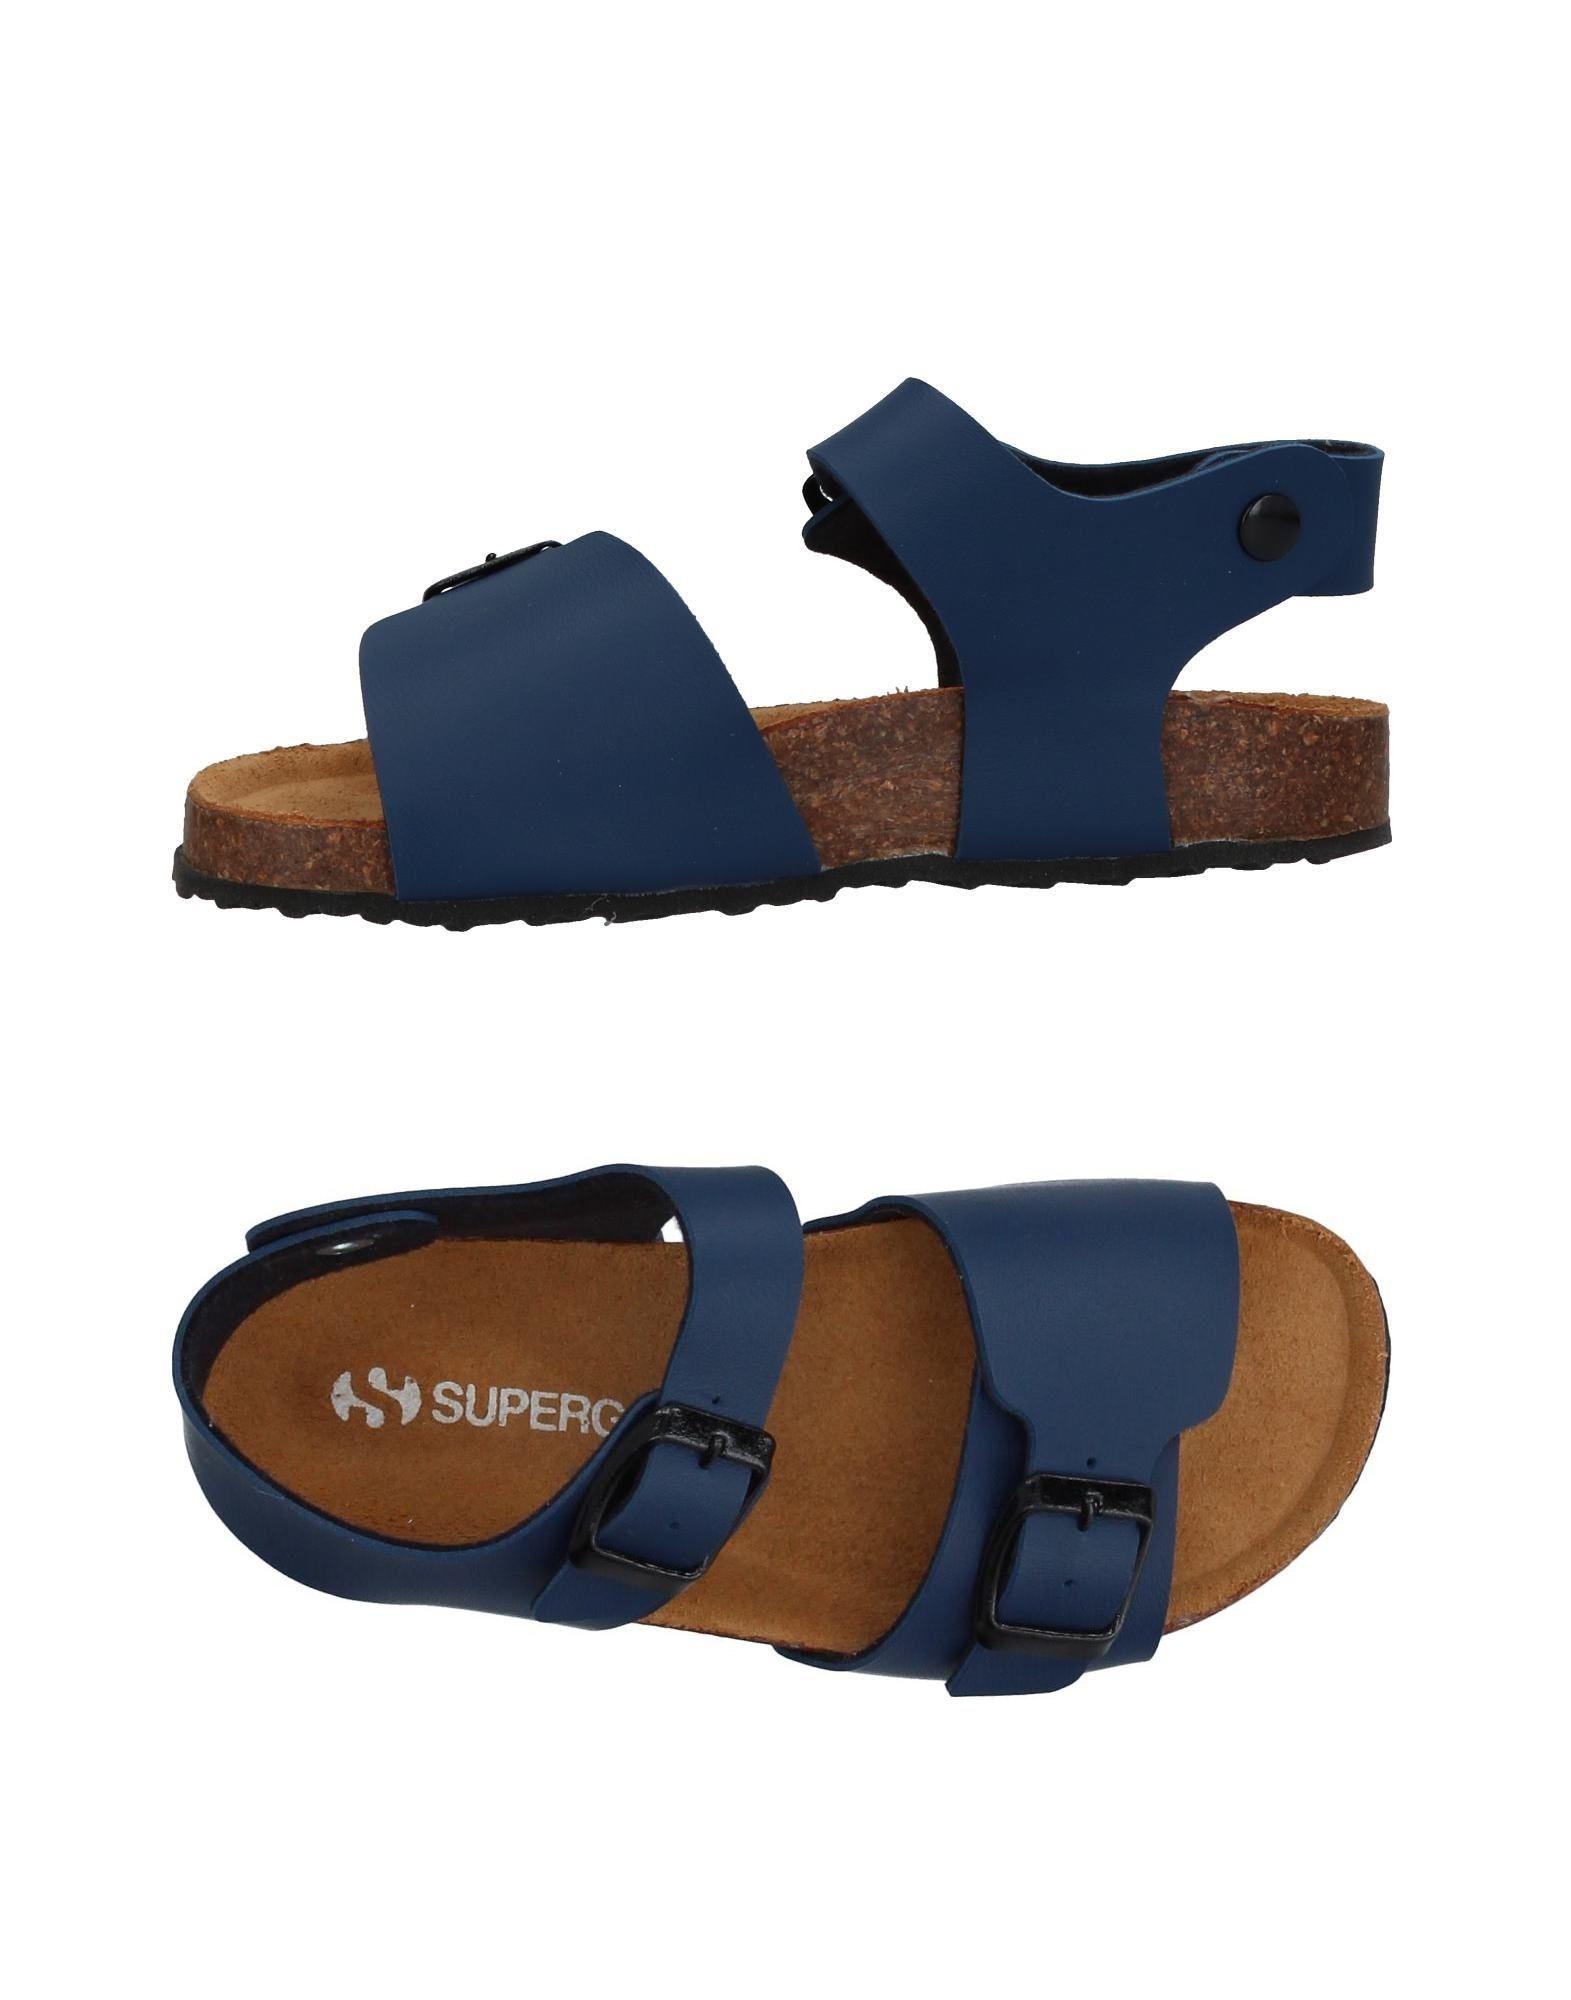 Superga Sandals in Dark Blue (Blue) for 